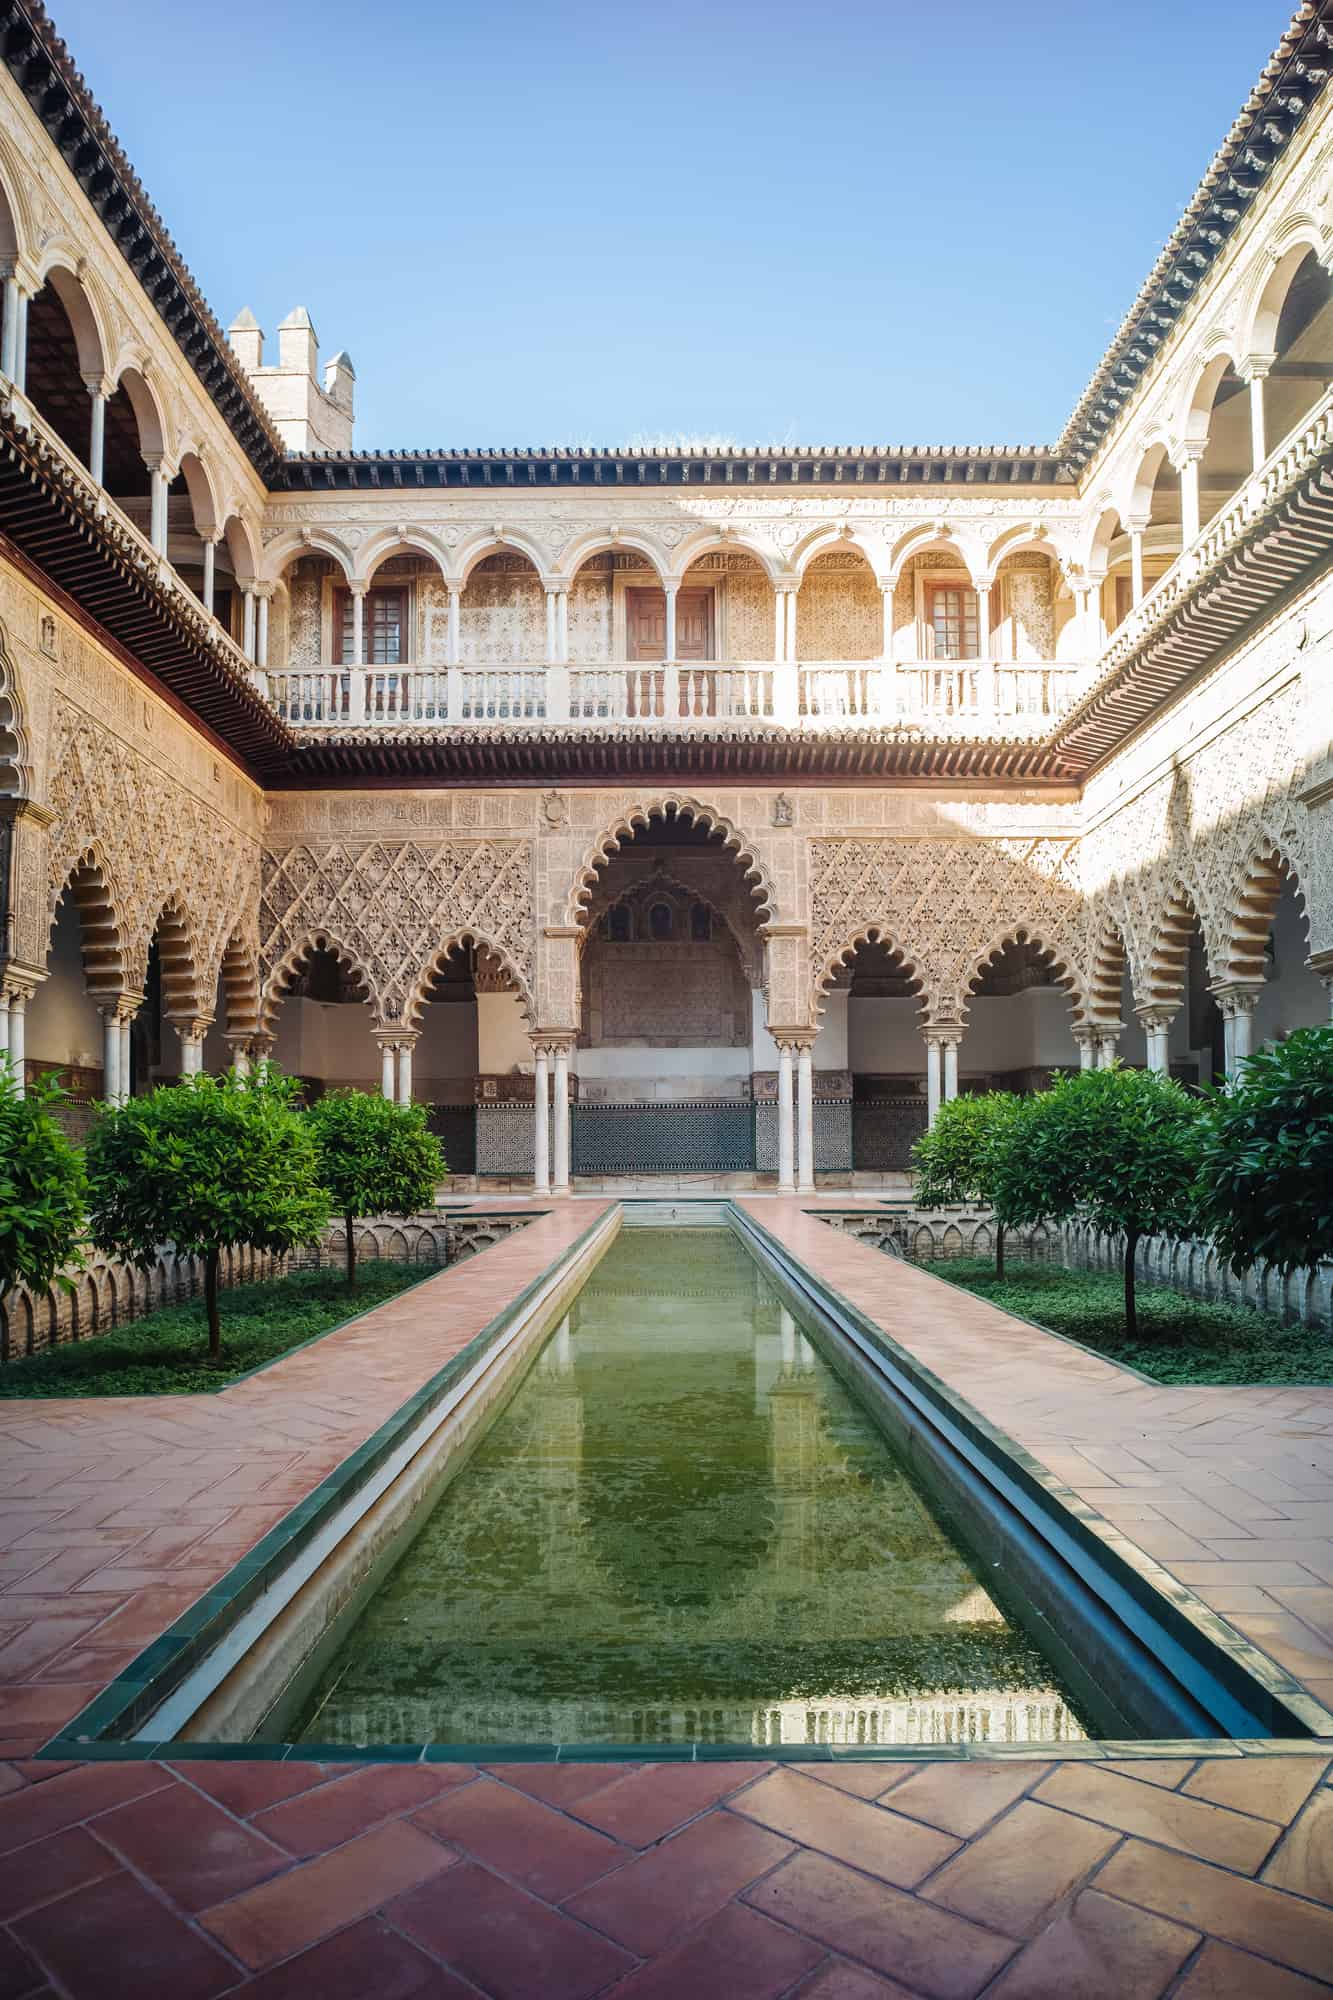 The Alcazar of Seville